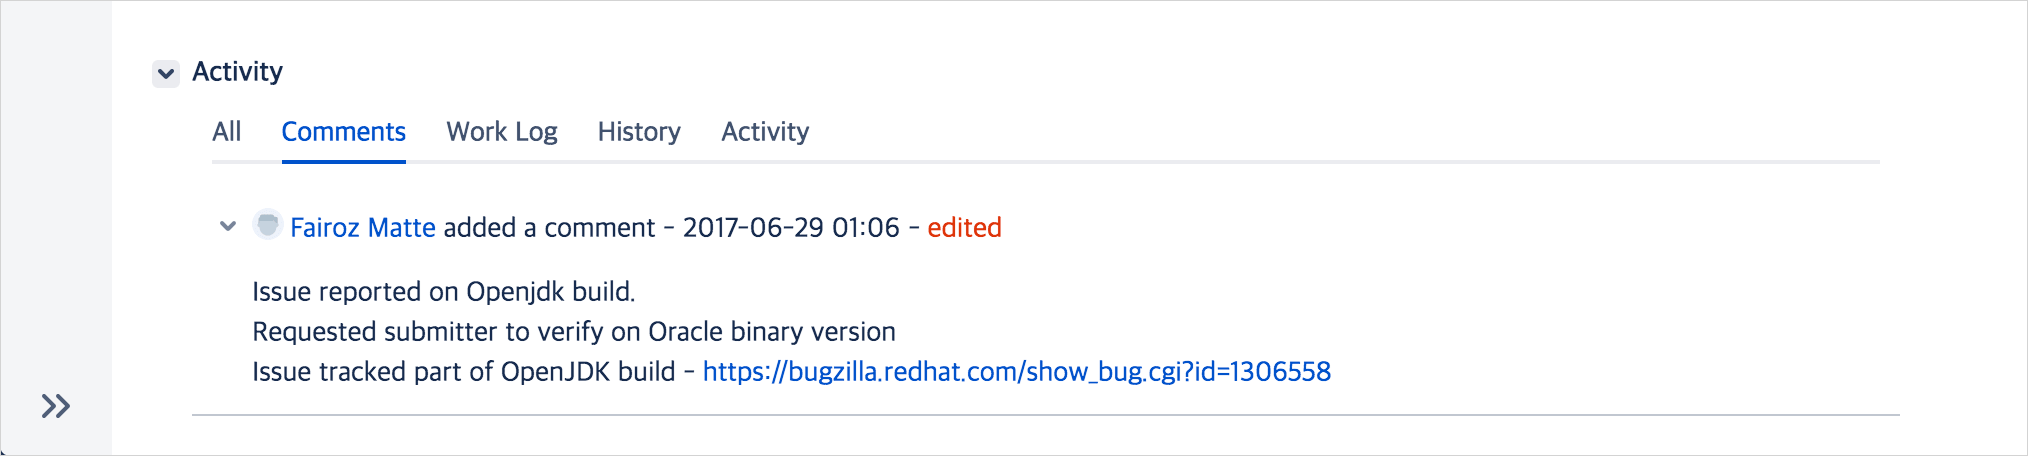 bug_openjdk_java_net_activity_comment